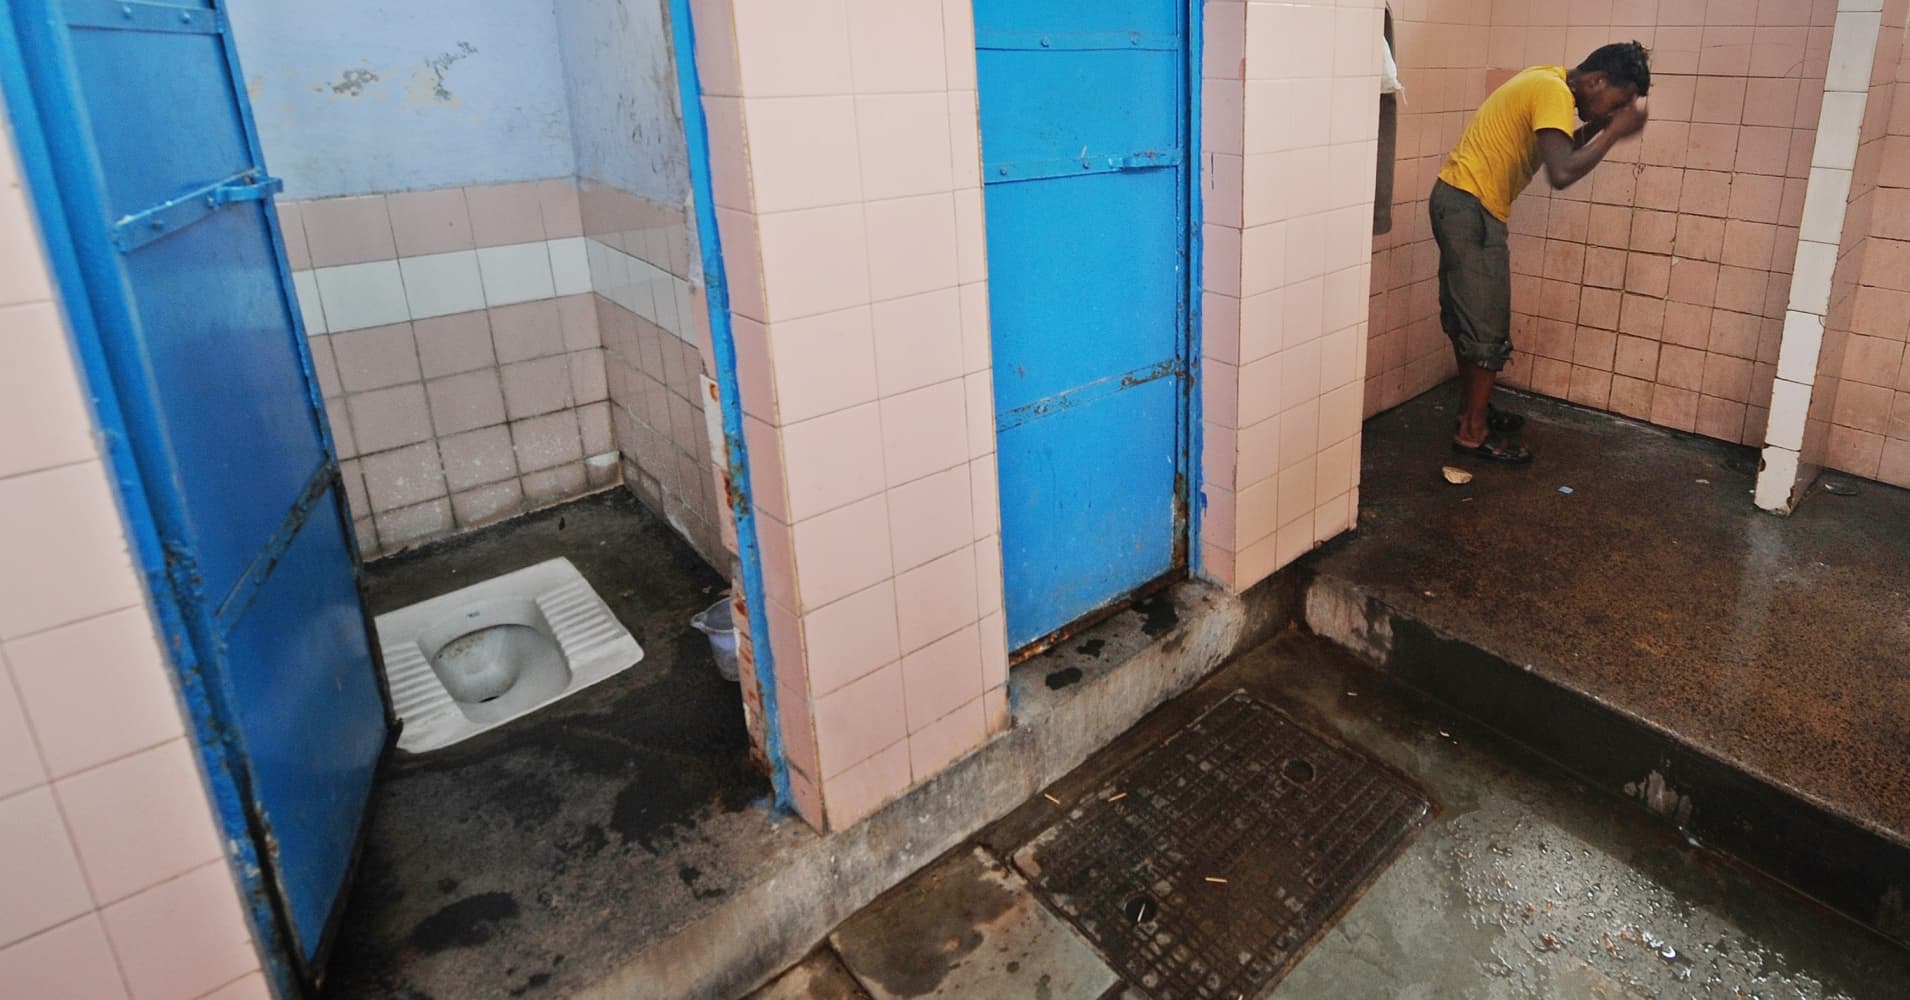 Sanitation health crisis: 2.4 billion people need toilets